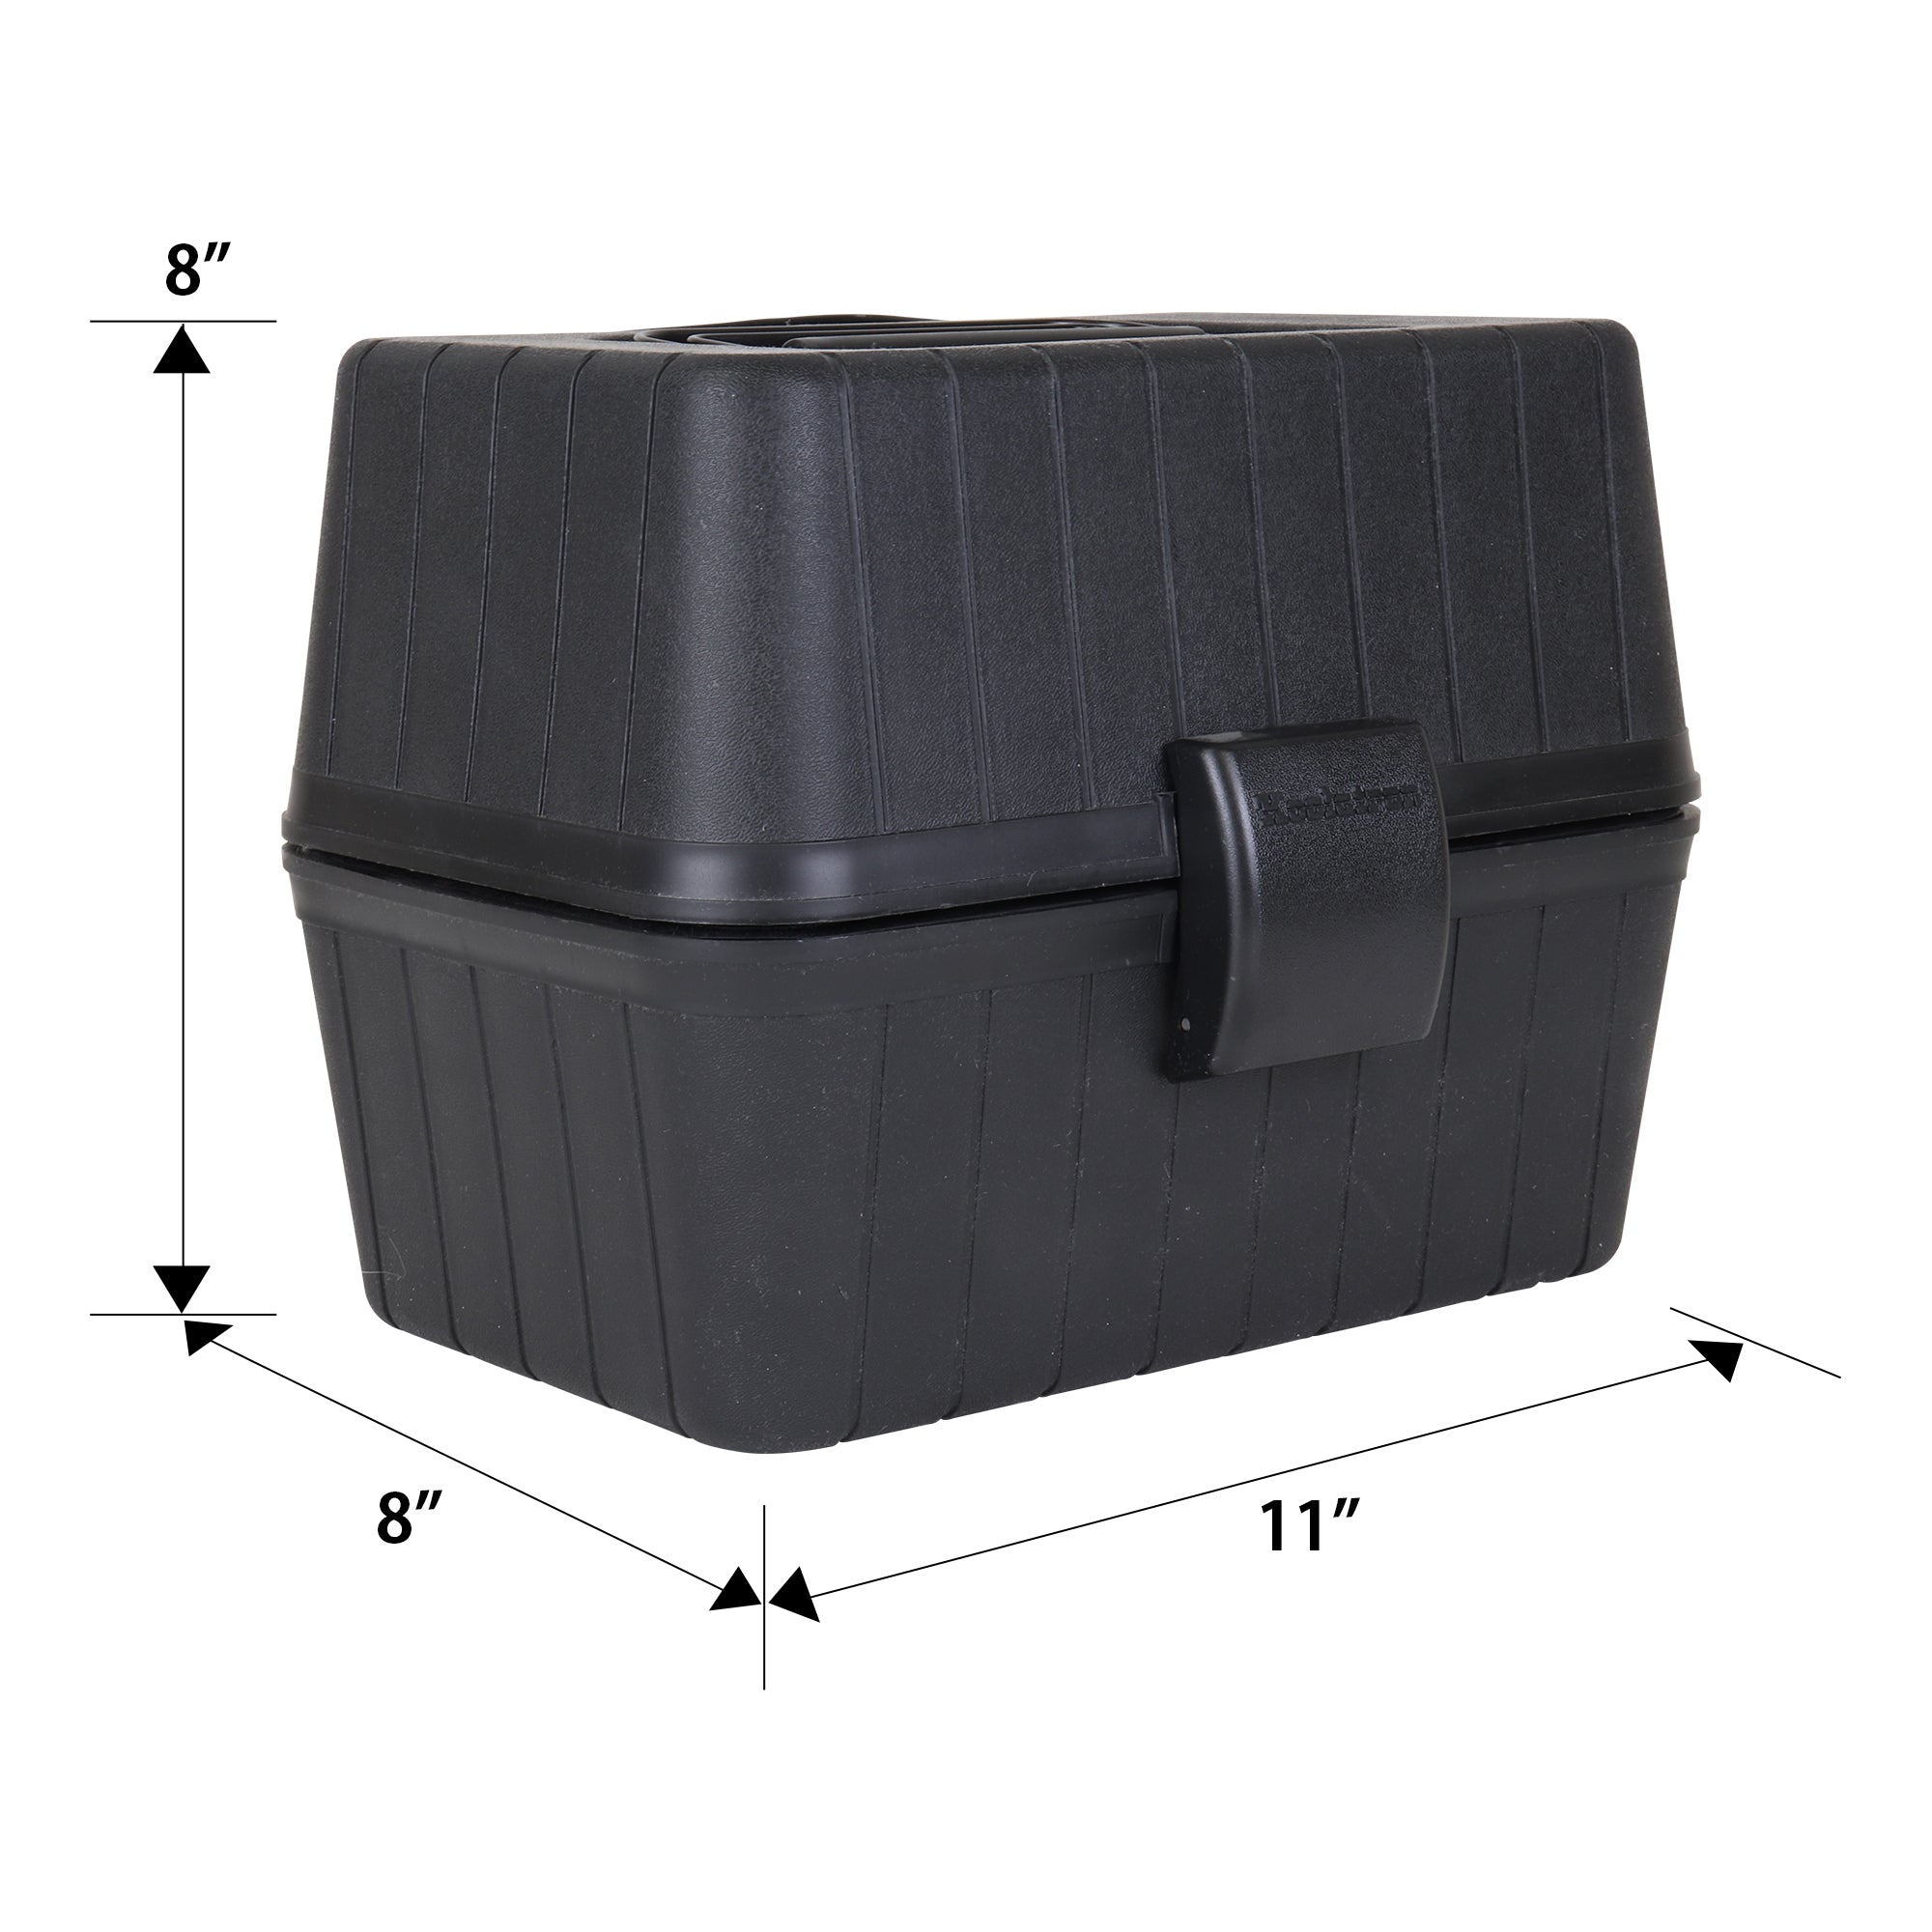 Vintage Black Thermos Plastic Lunchbox Storage Case 